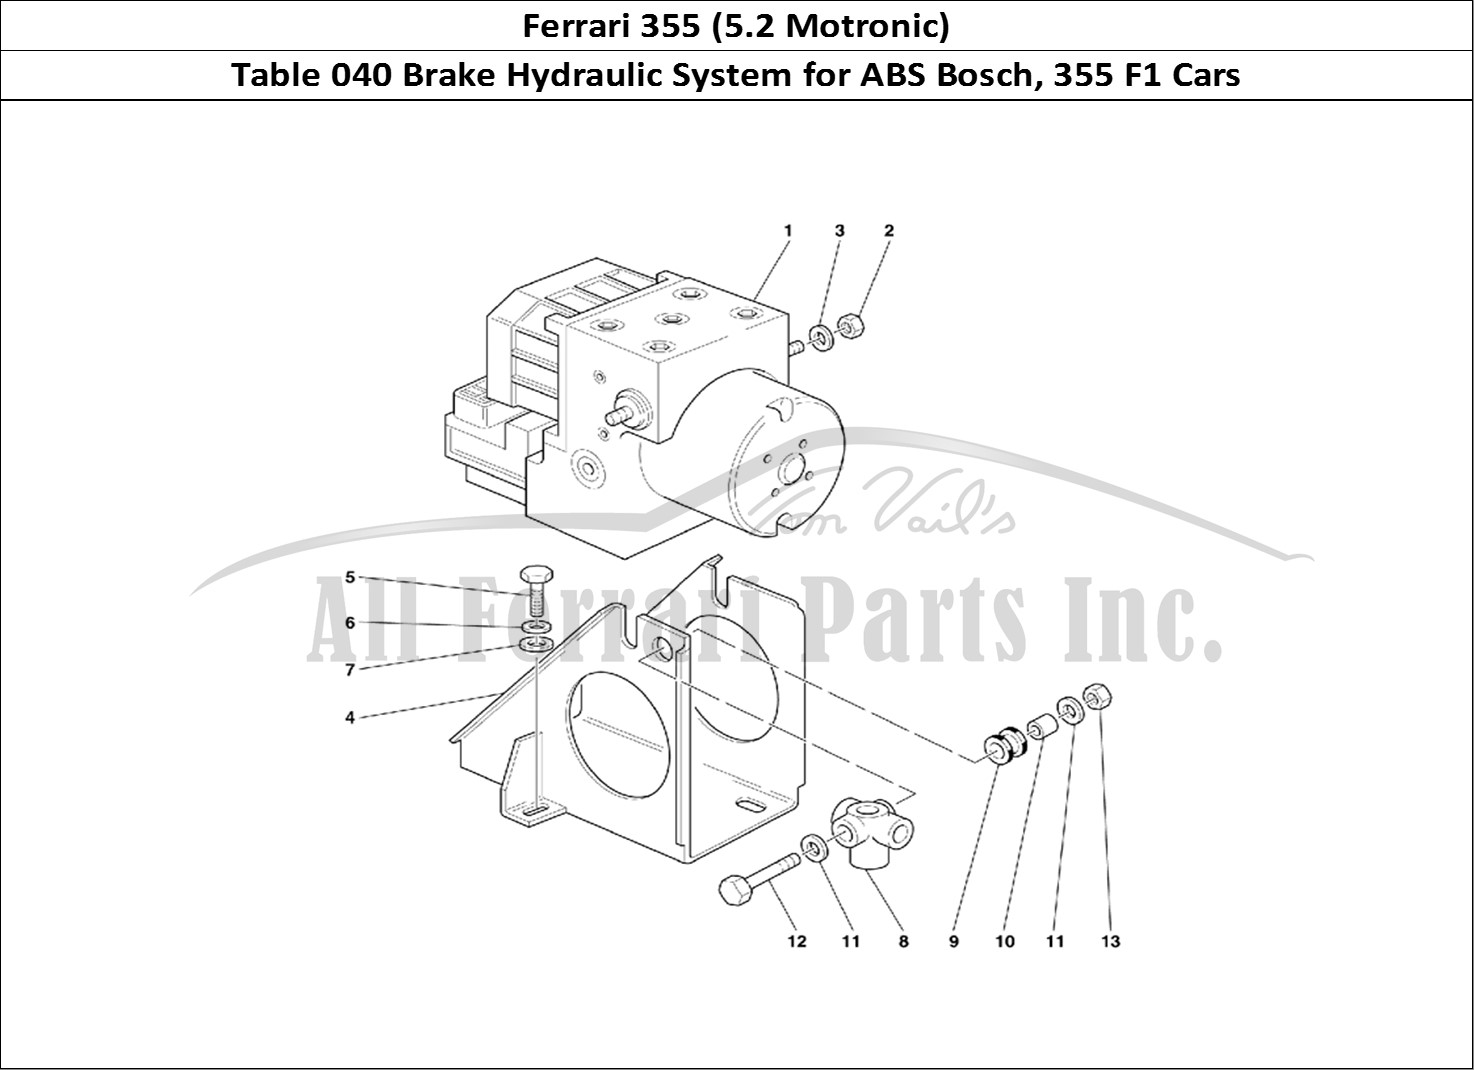 Ferrari Parts Ferrari 355 (5.2 Motronic) Page 040 Hydraulic System for ABS